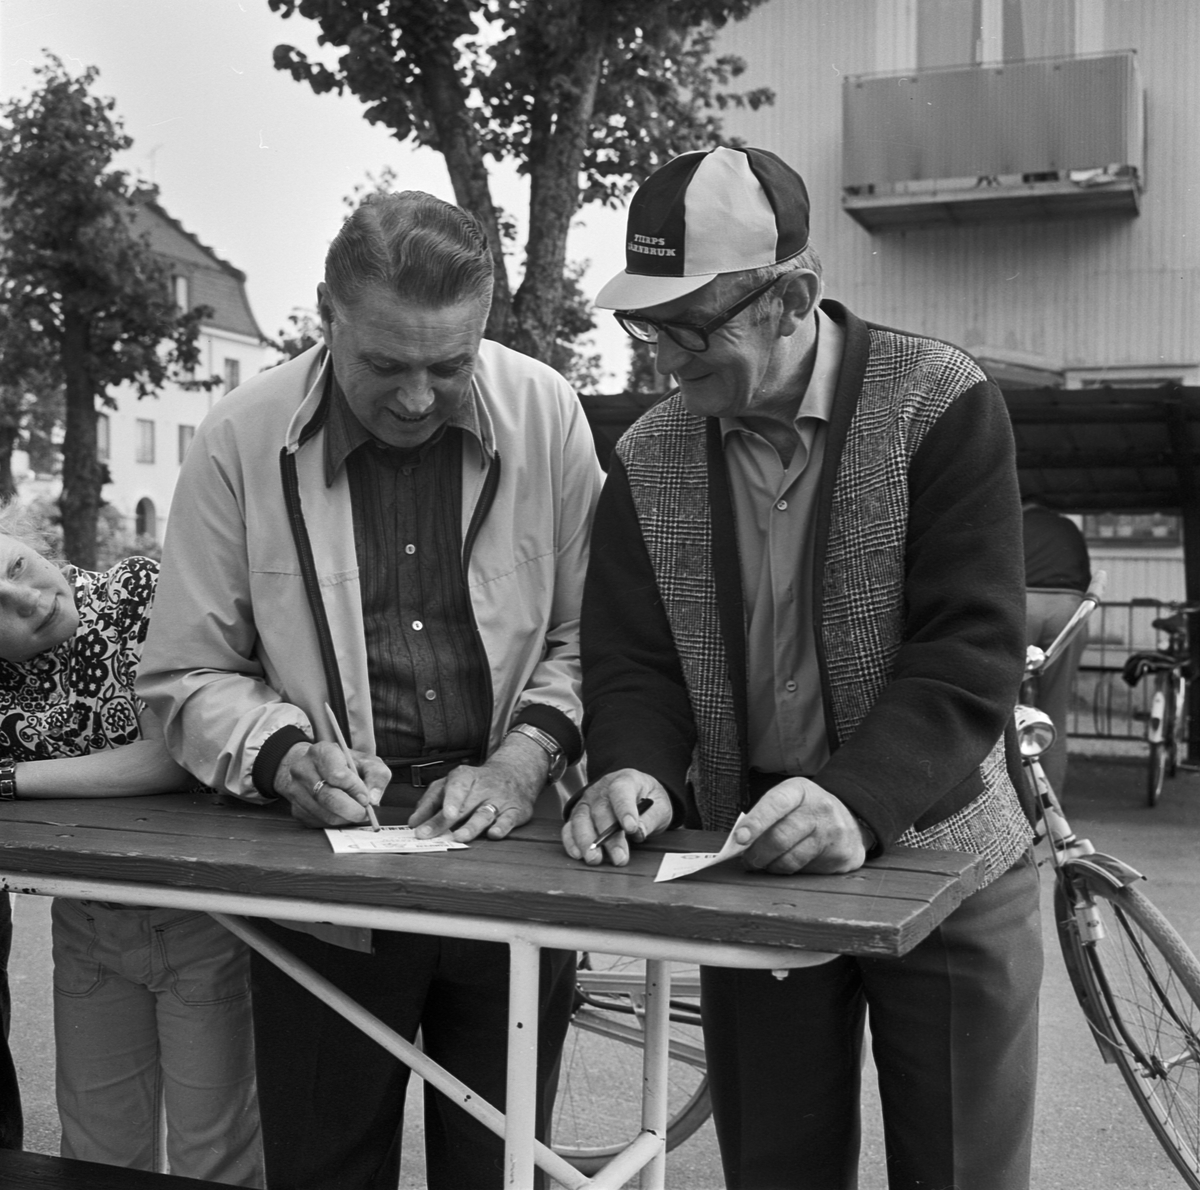 Tierps kommun cyklar, Uppland juni 1972